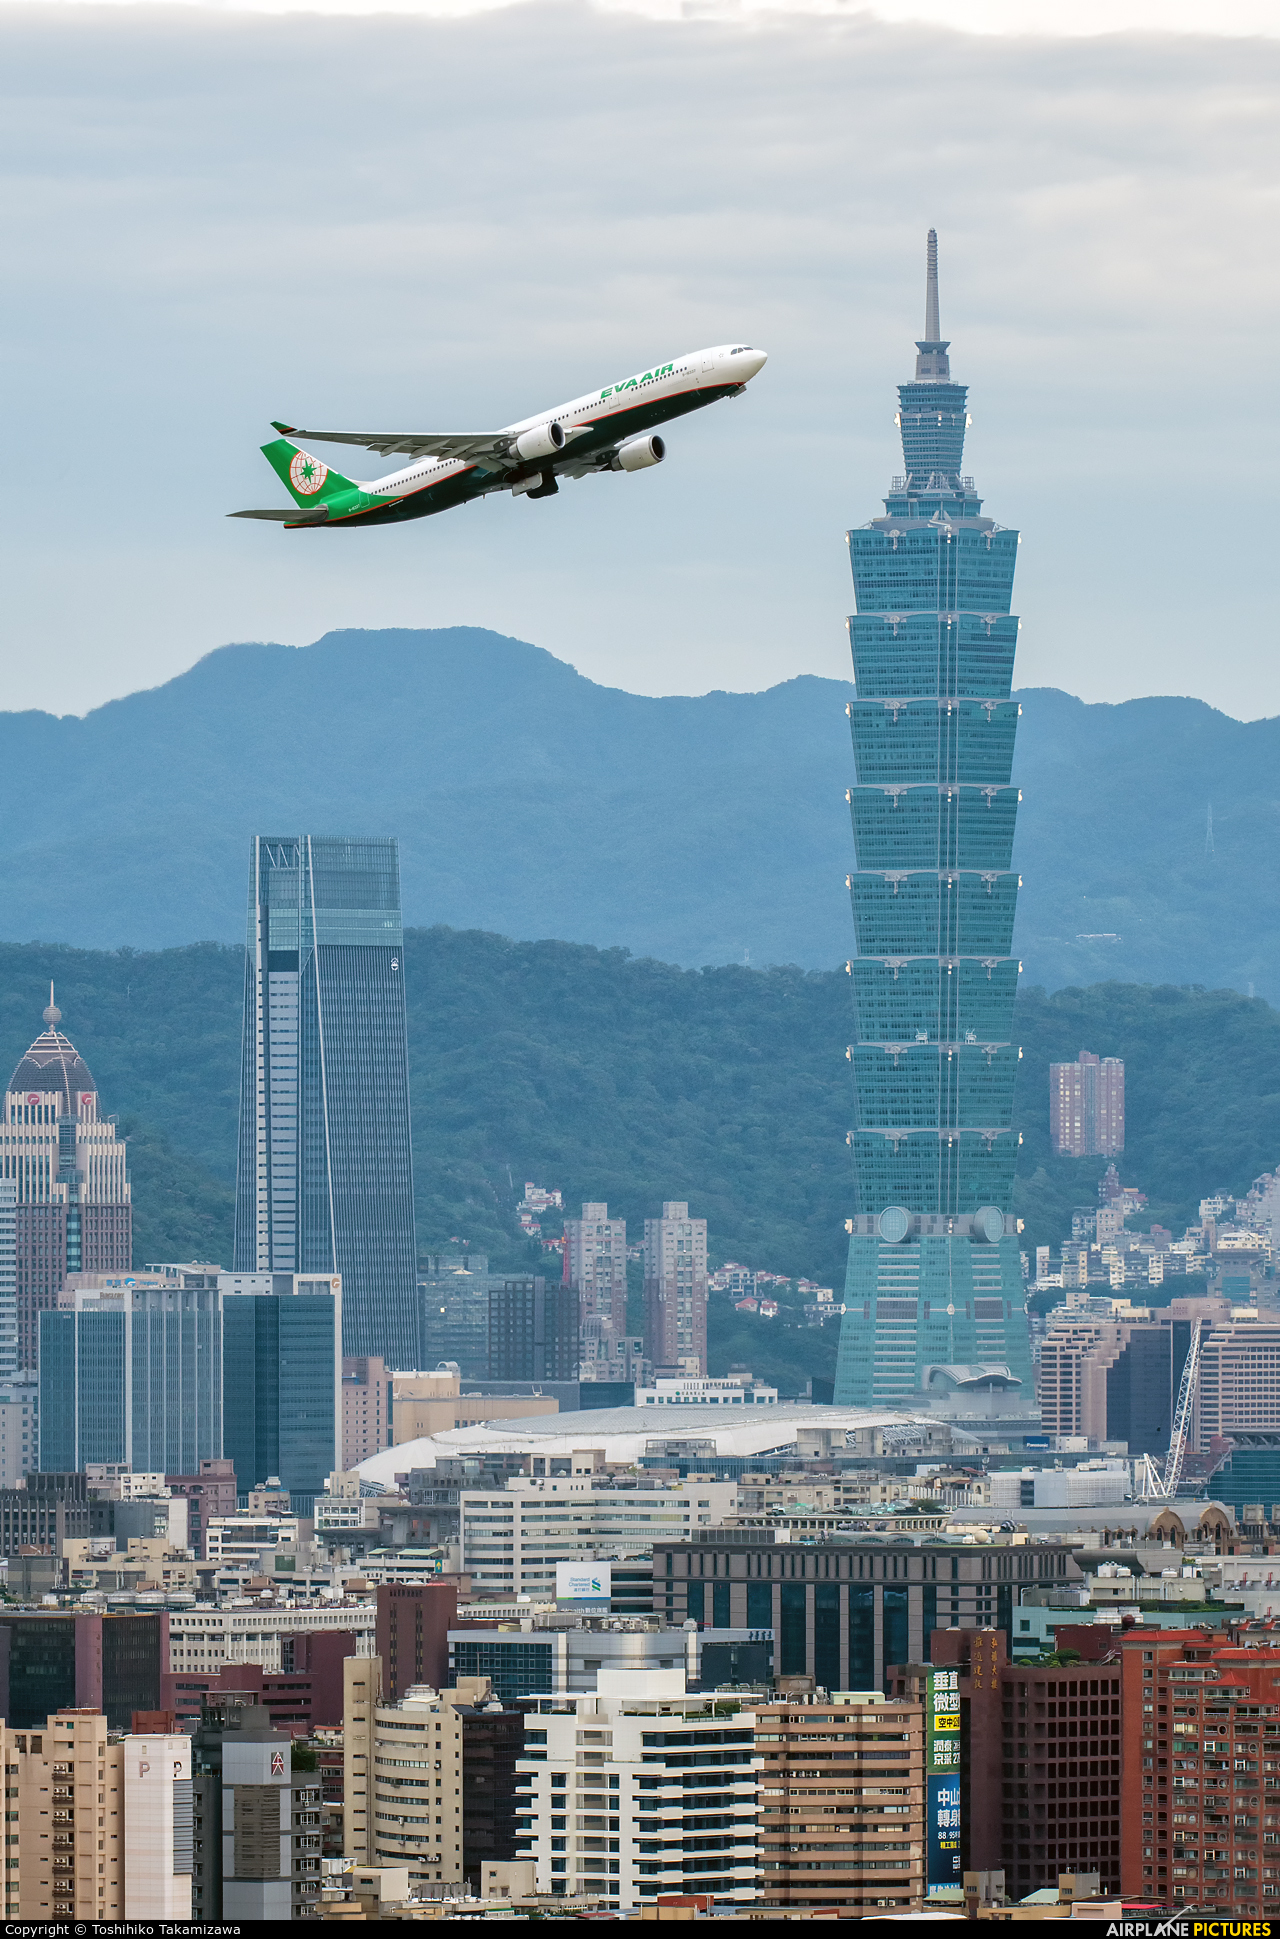 Eva Air B-16337 aircraft at Taipei Sung Shan/Songshan Airport